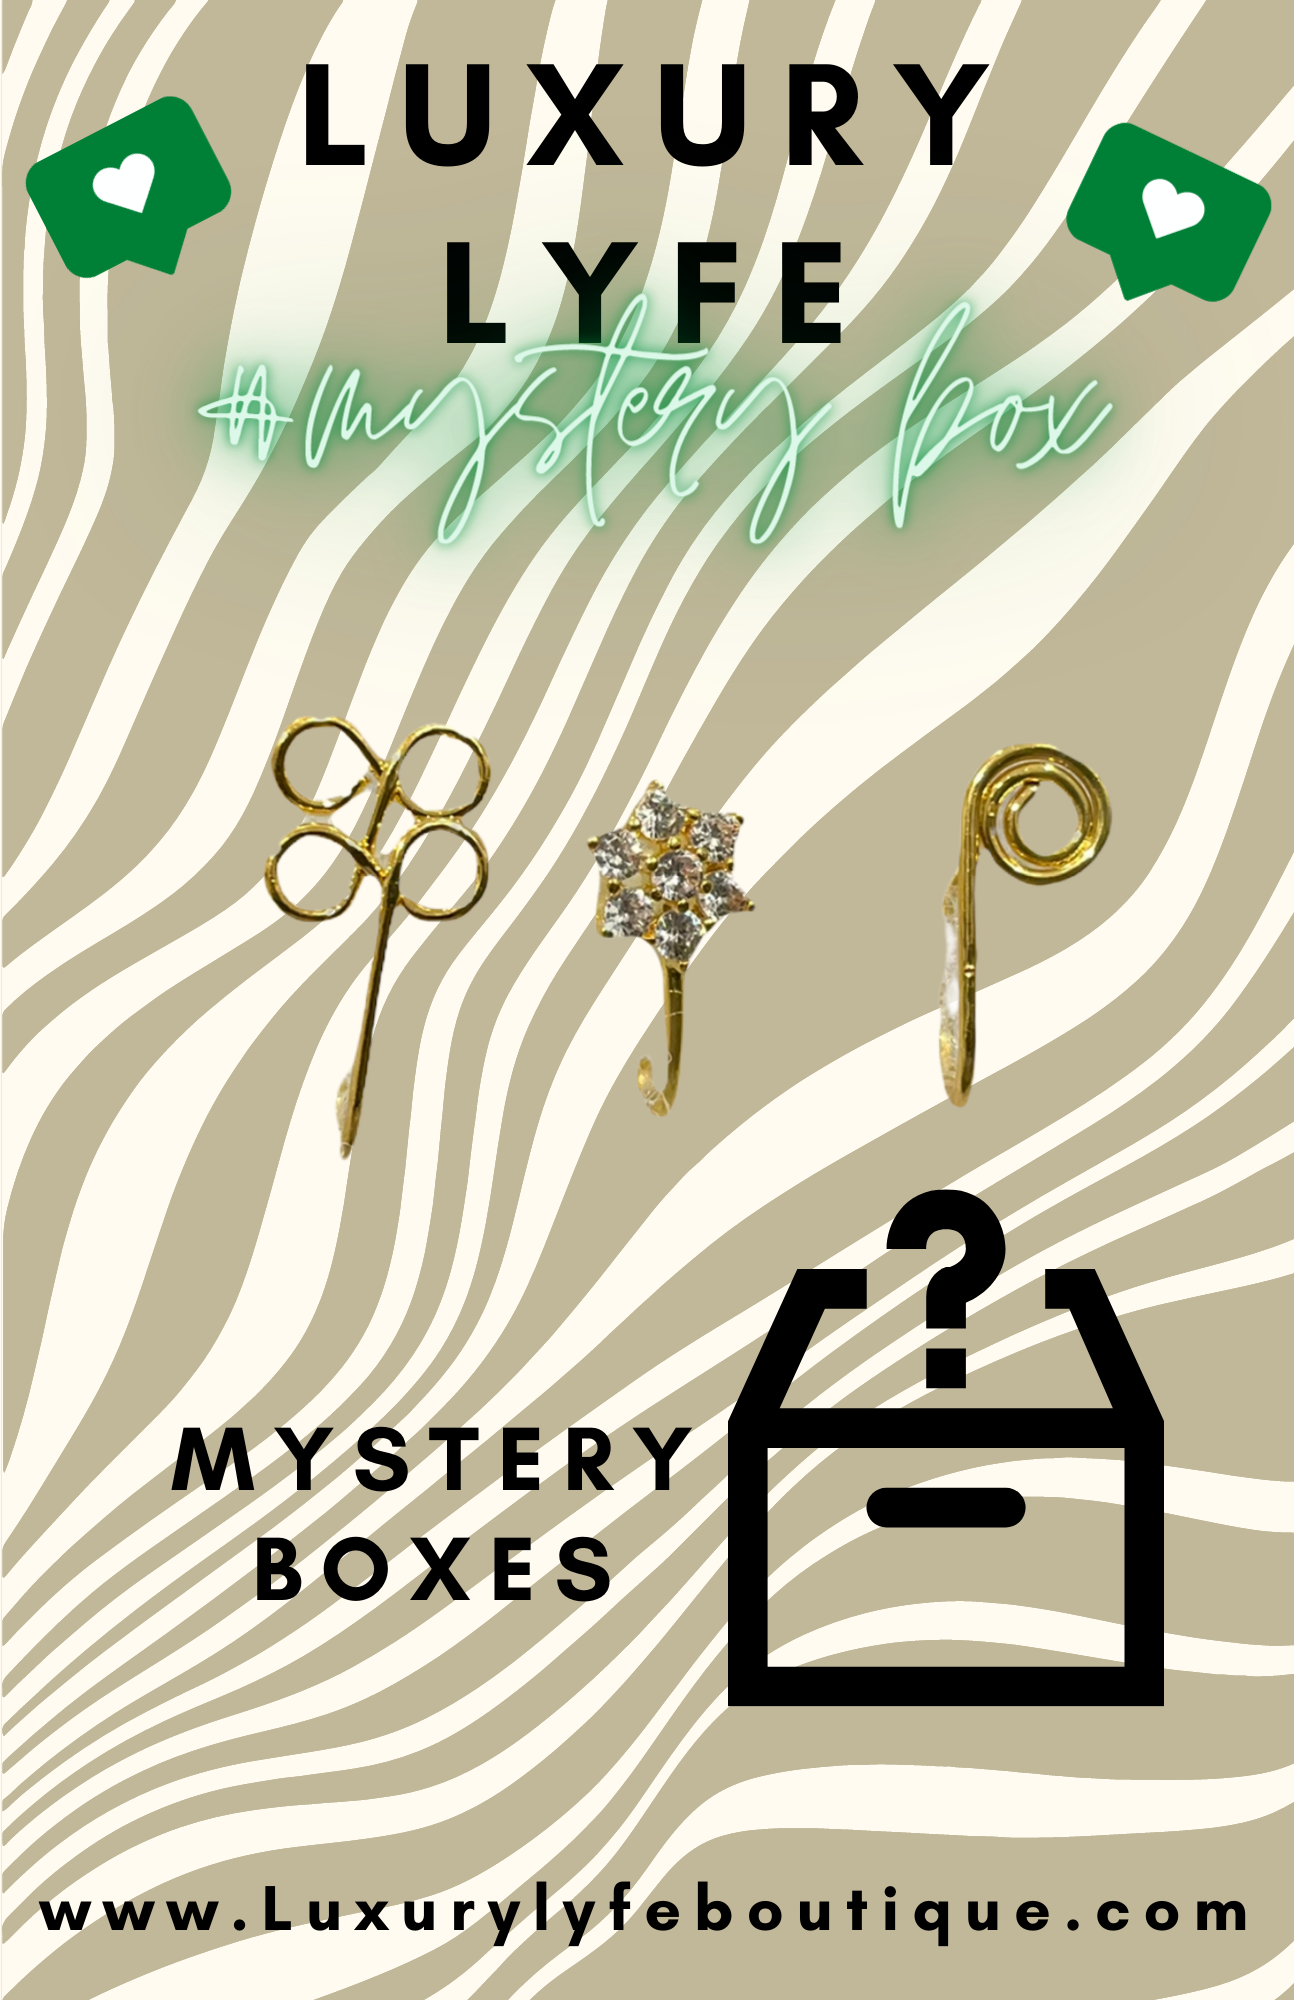 SHOPCCLUXURY Mystery Clip Box!